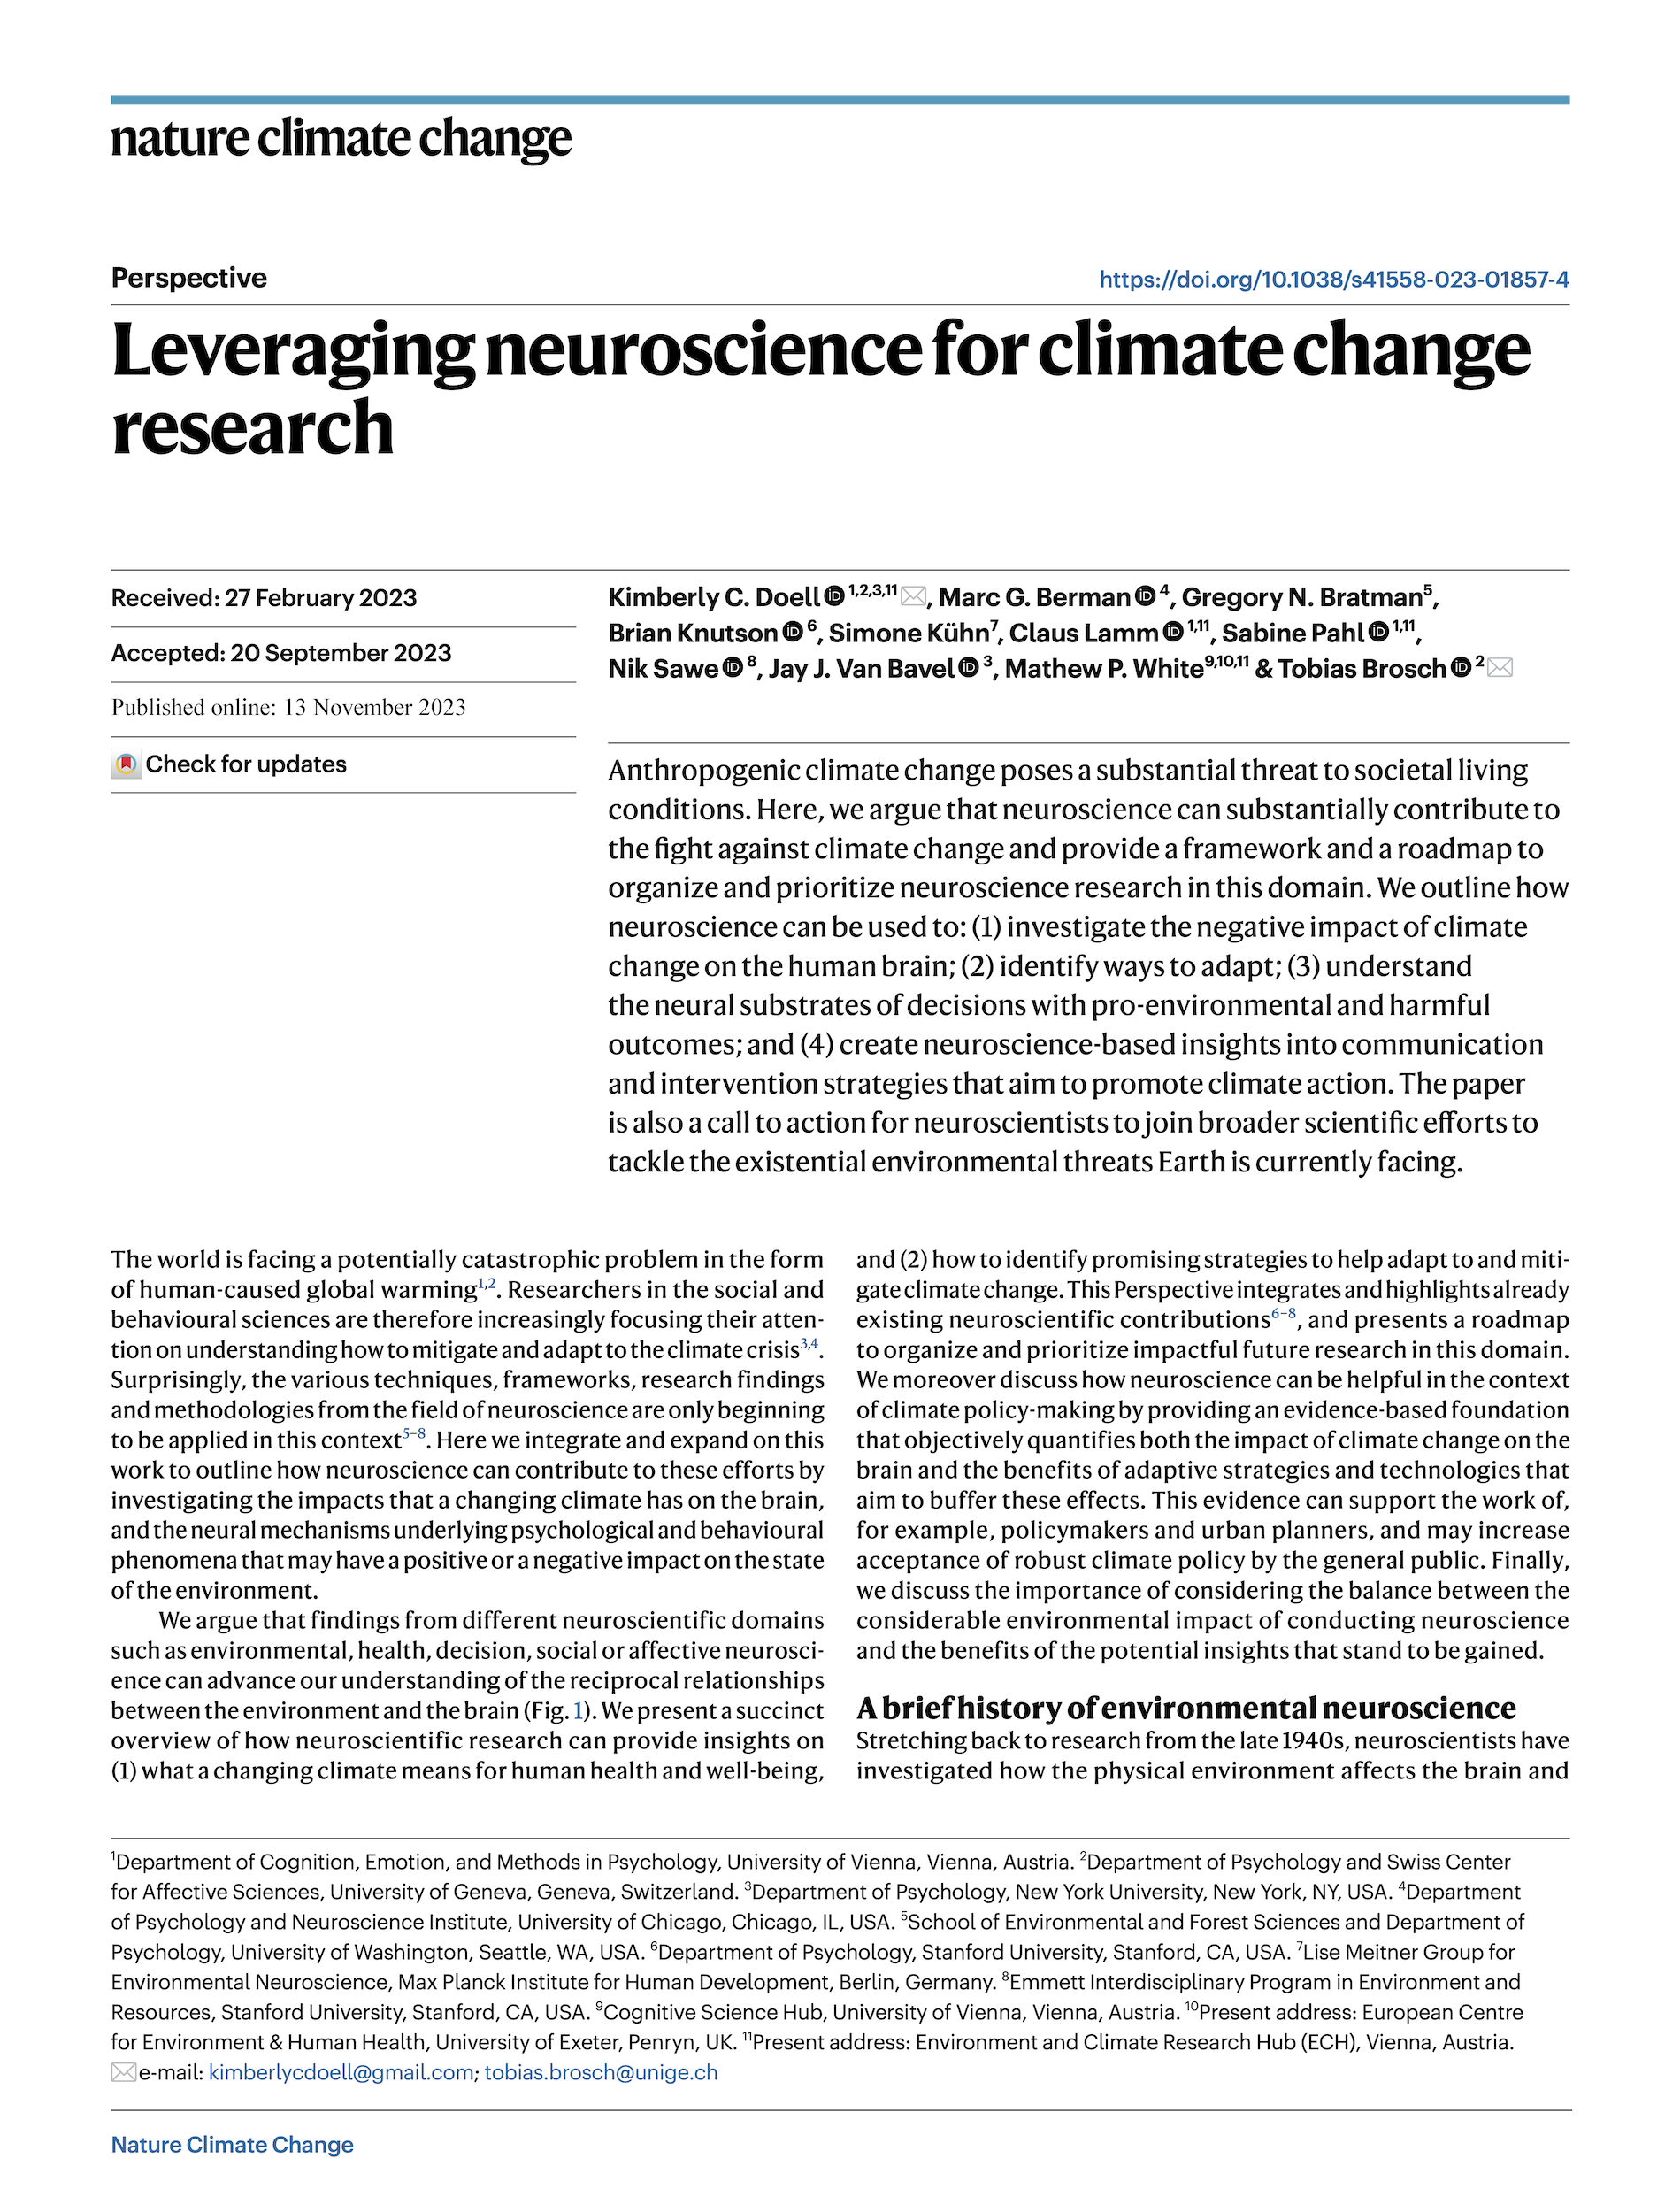 Doell_et_al._-_2023_-_Leveraging_neuroscience_for_climate_change_researc.png